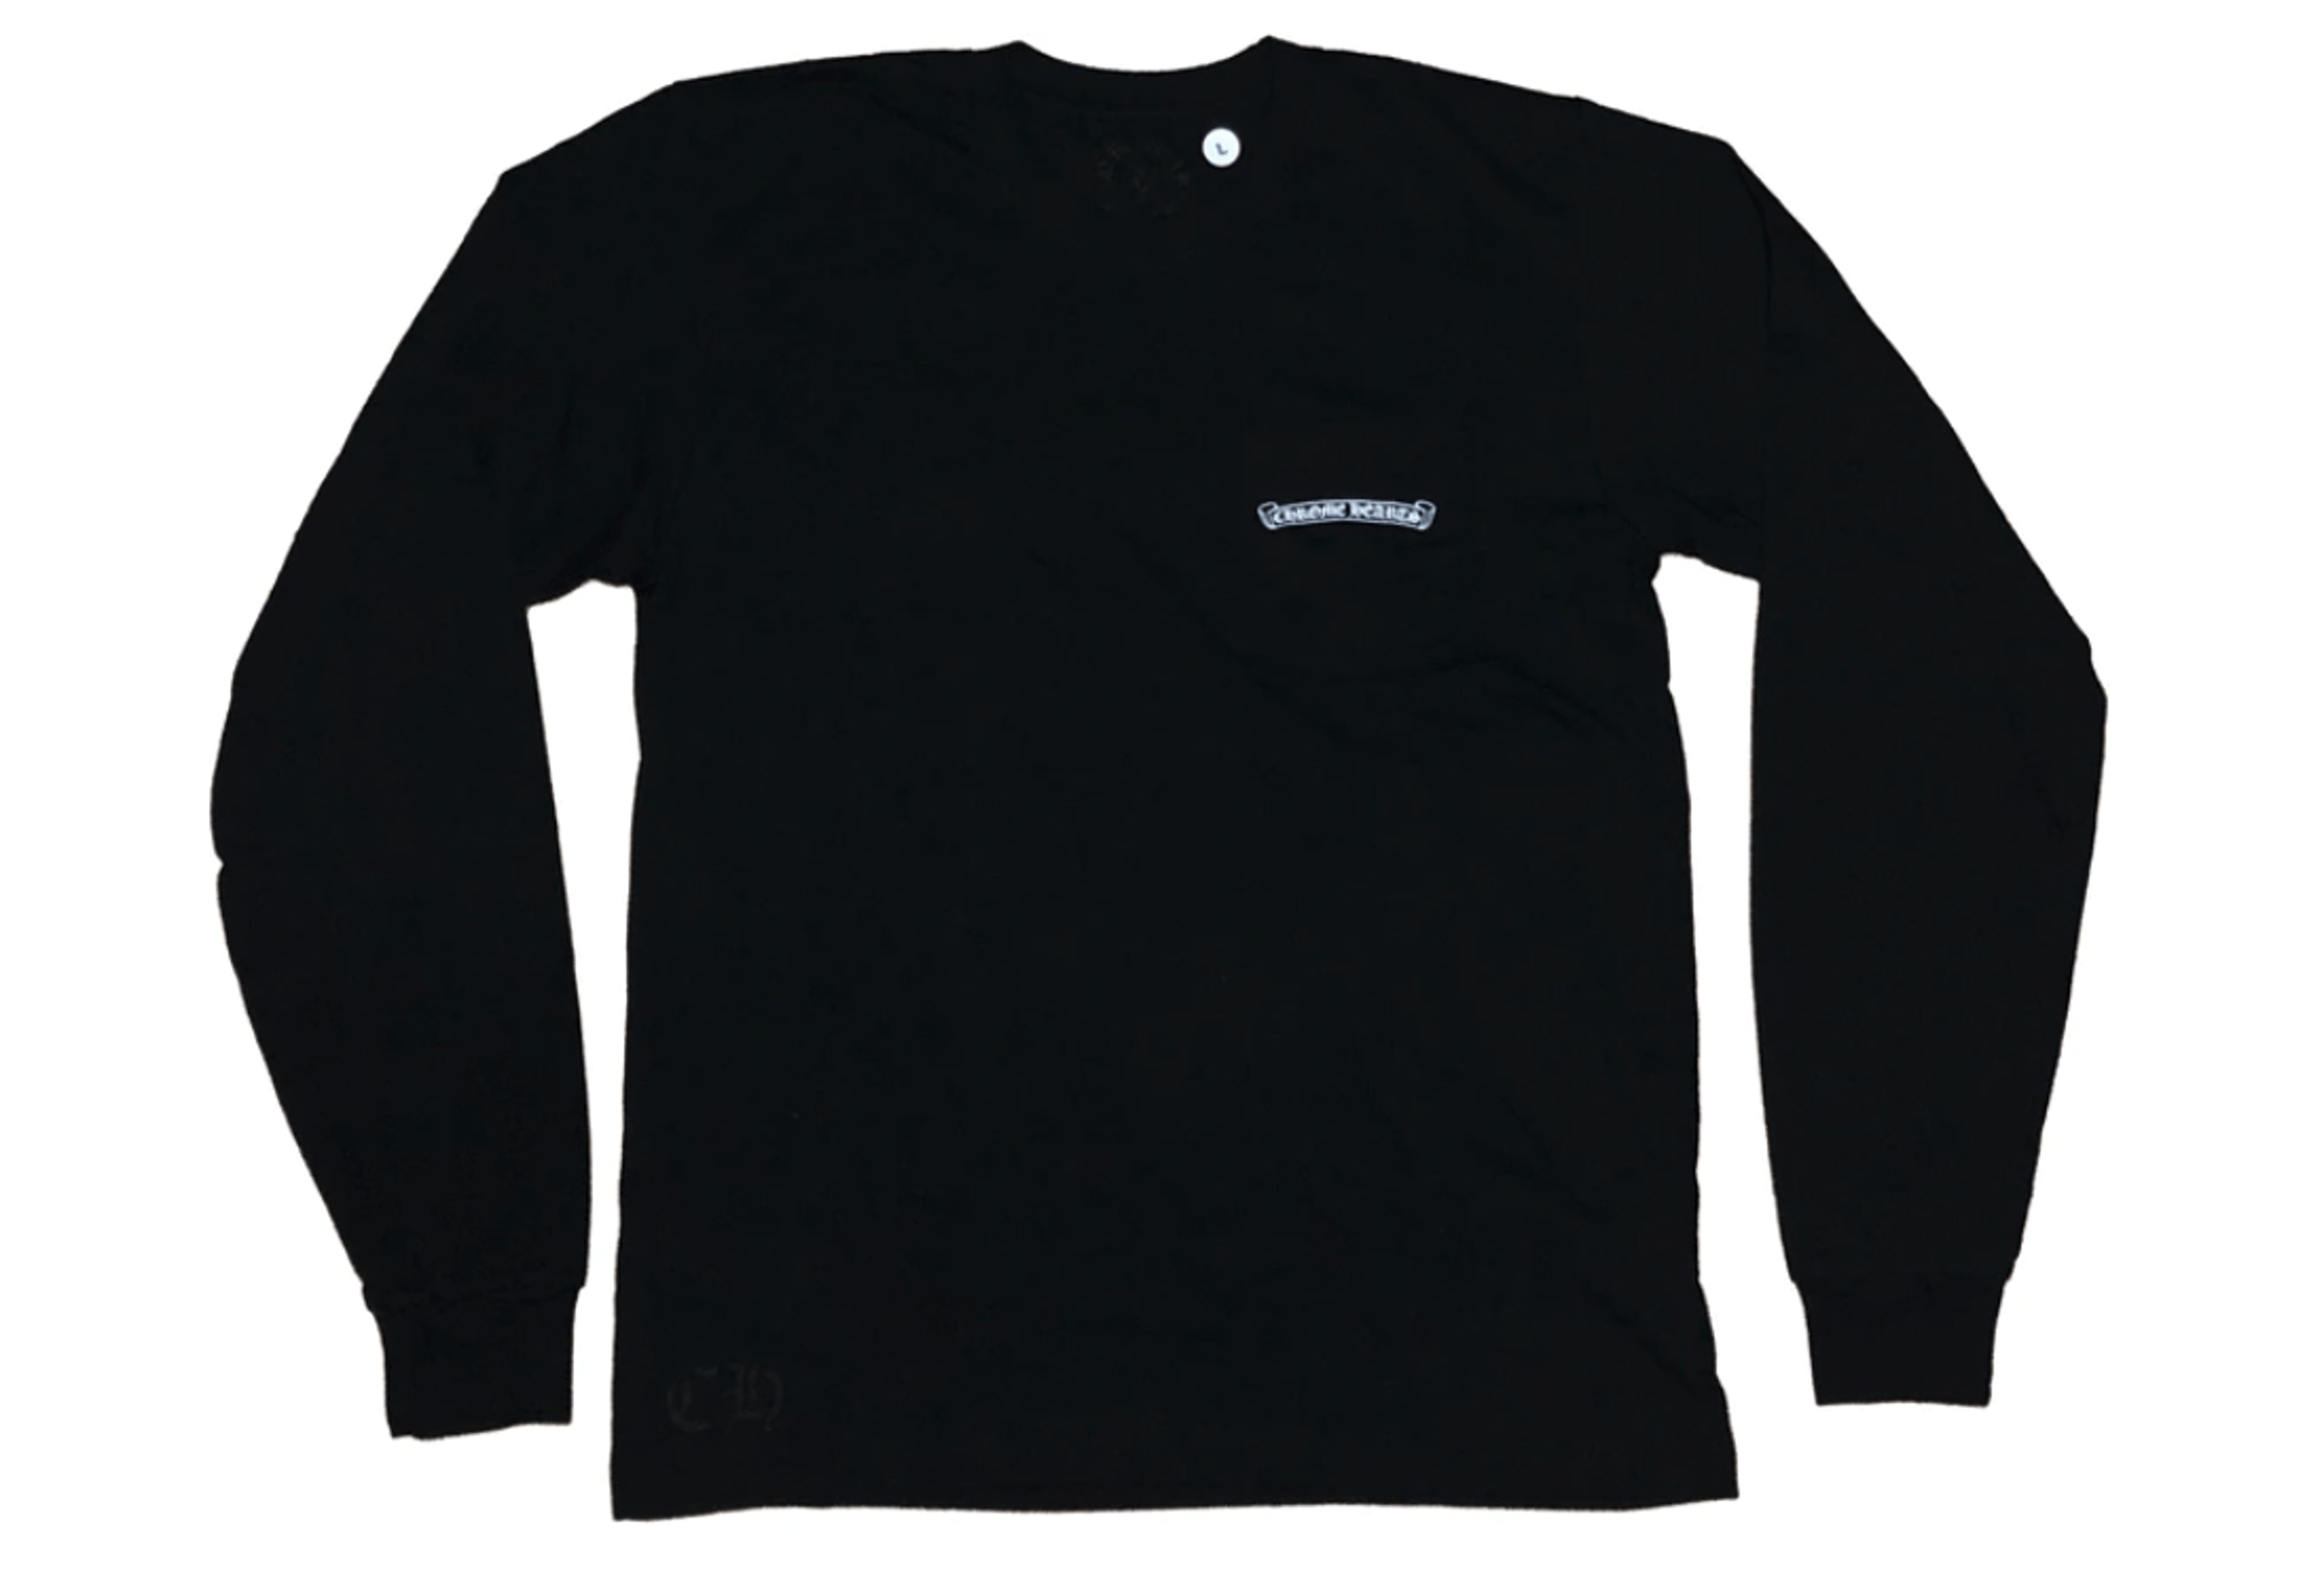 Alternate View 1 of Chrome Hearts Shoulder Logo Long Sleeve Tee Shirt Black